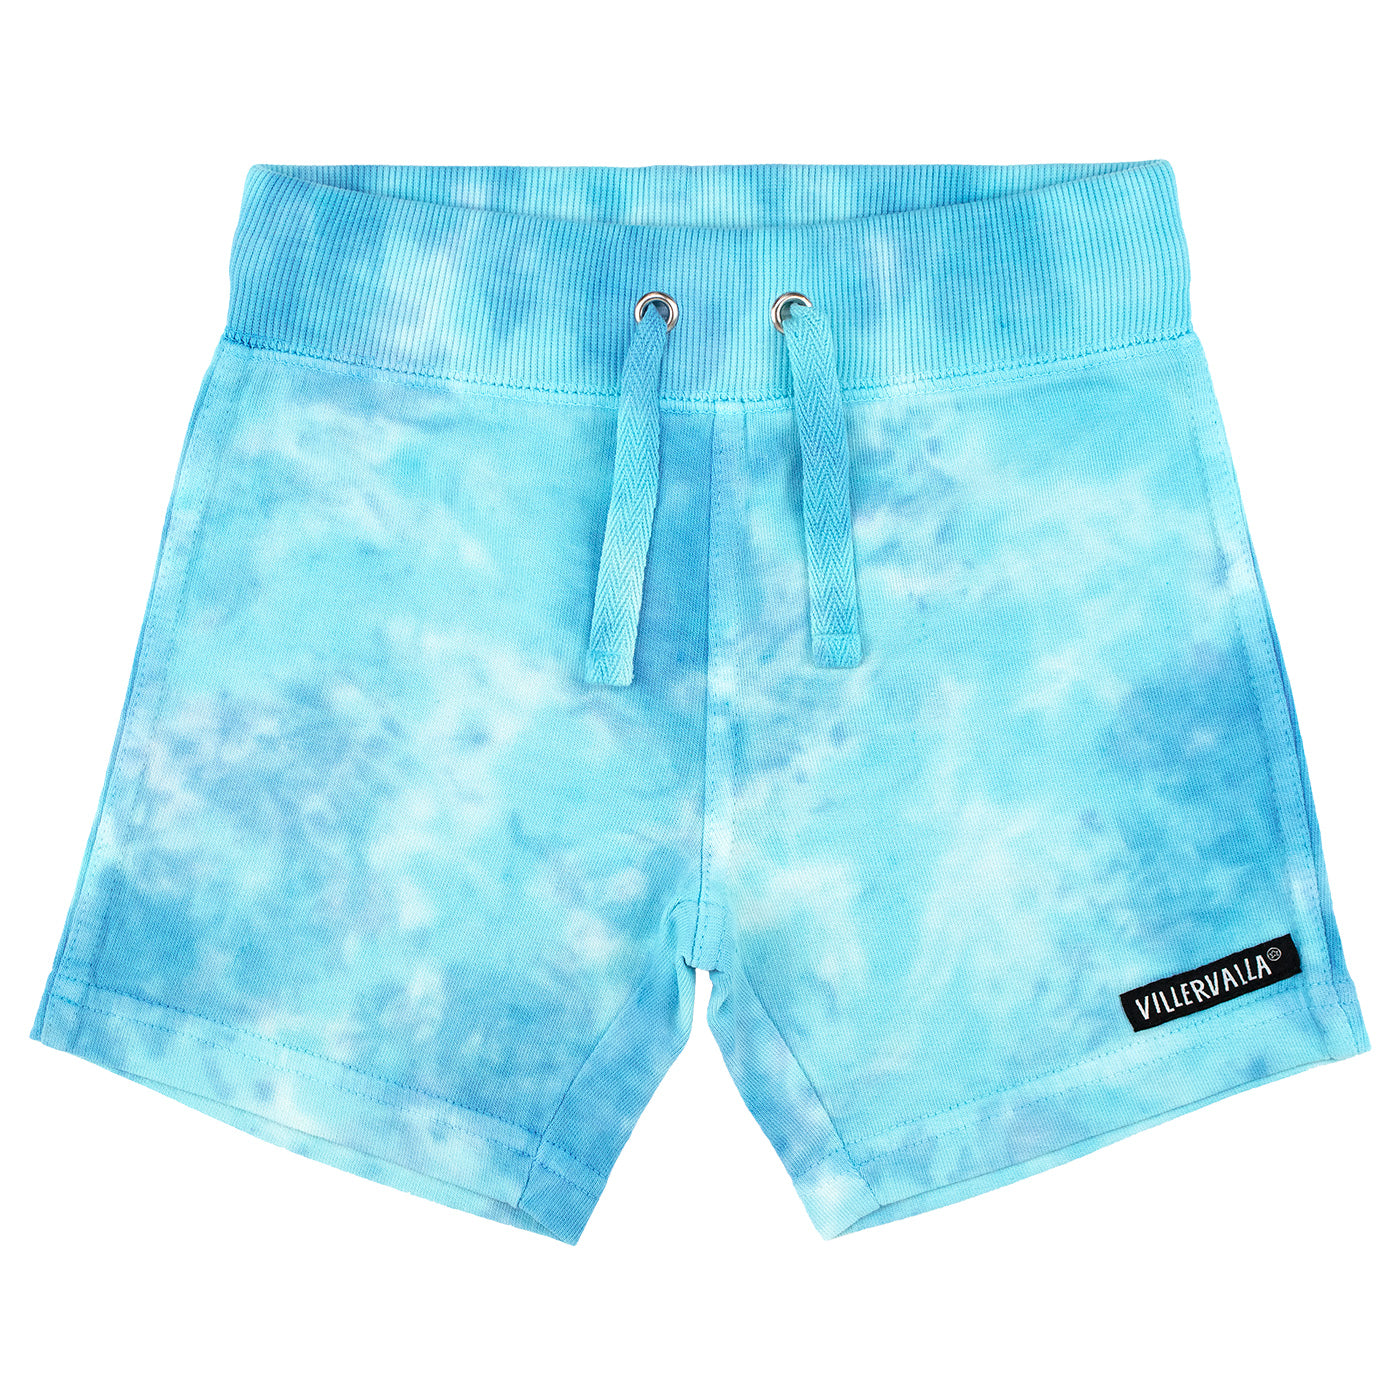 Tie Dye Relaxed Shorts - Lake / Pool-Villervalla-Modern Rascals